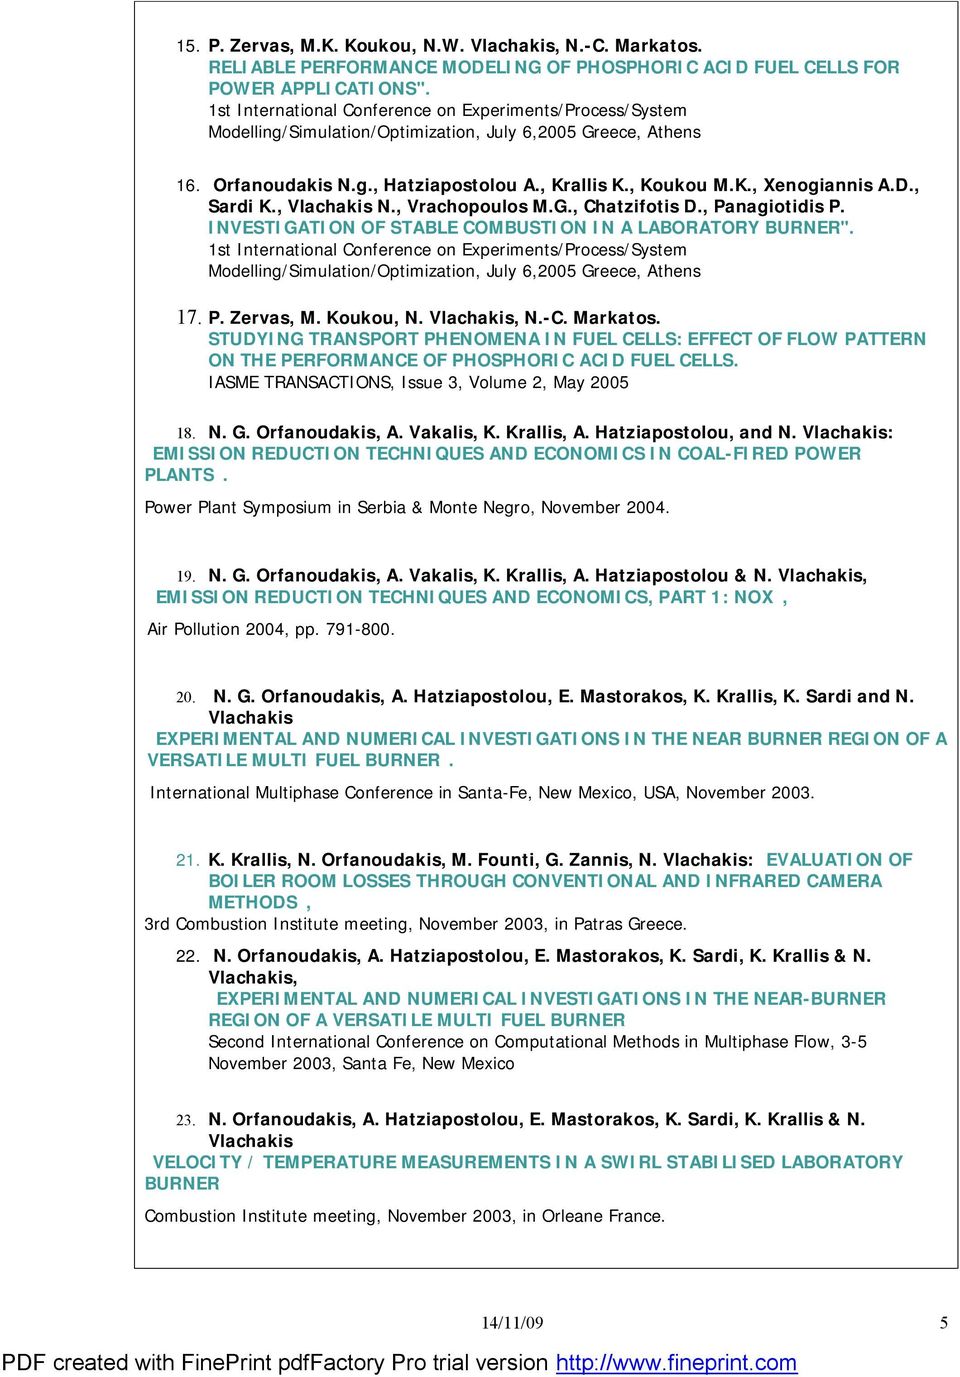 D., Sardi K., Vlachakis N., Vrachopoulos M.G., Chatzifotis D., Panagiotidis P. INVESTIGATION OF STABLE COMBUSTION IN A LABORATORY BURNER".